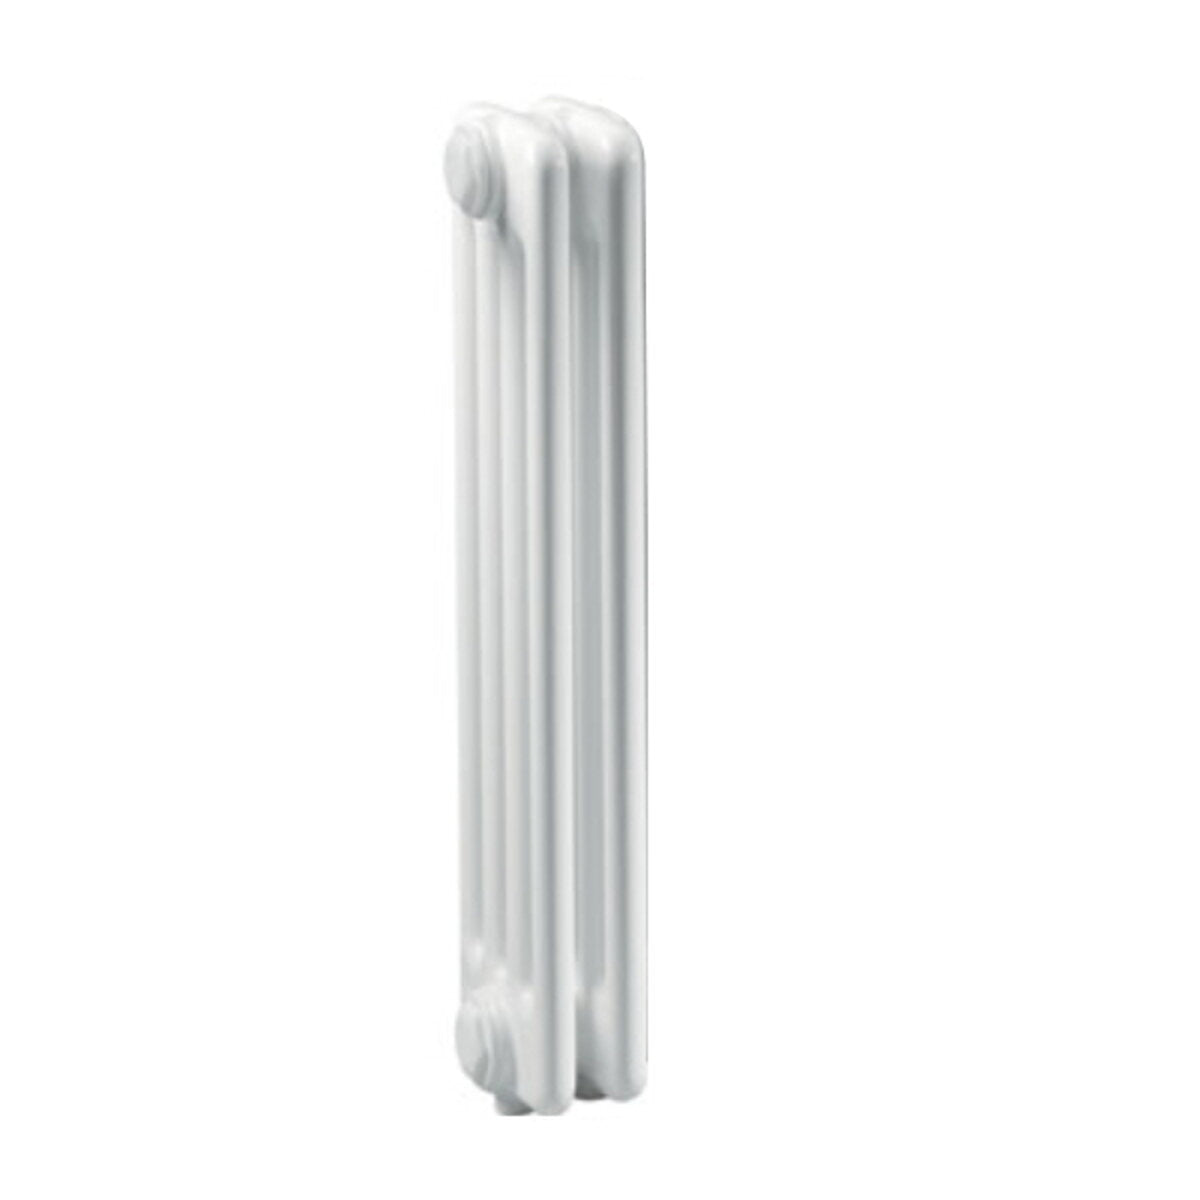 Ercos Comby steel column radiator 2 elements 3 columns center distance 600 mm